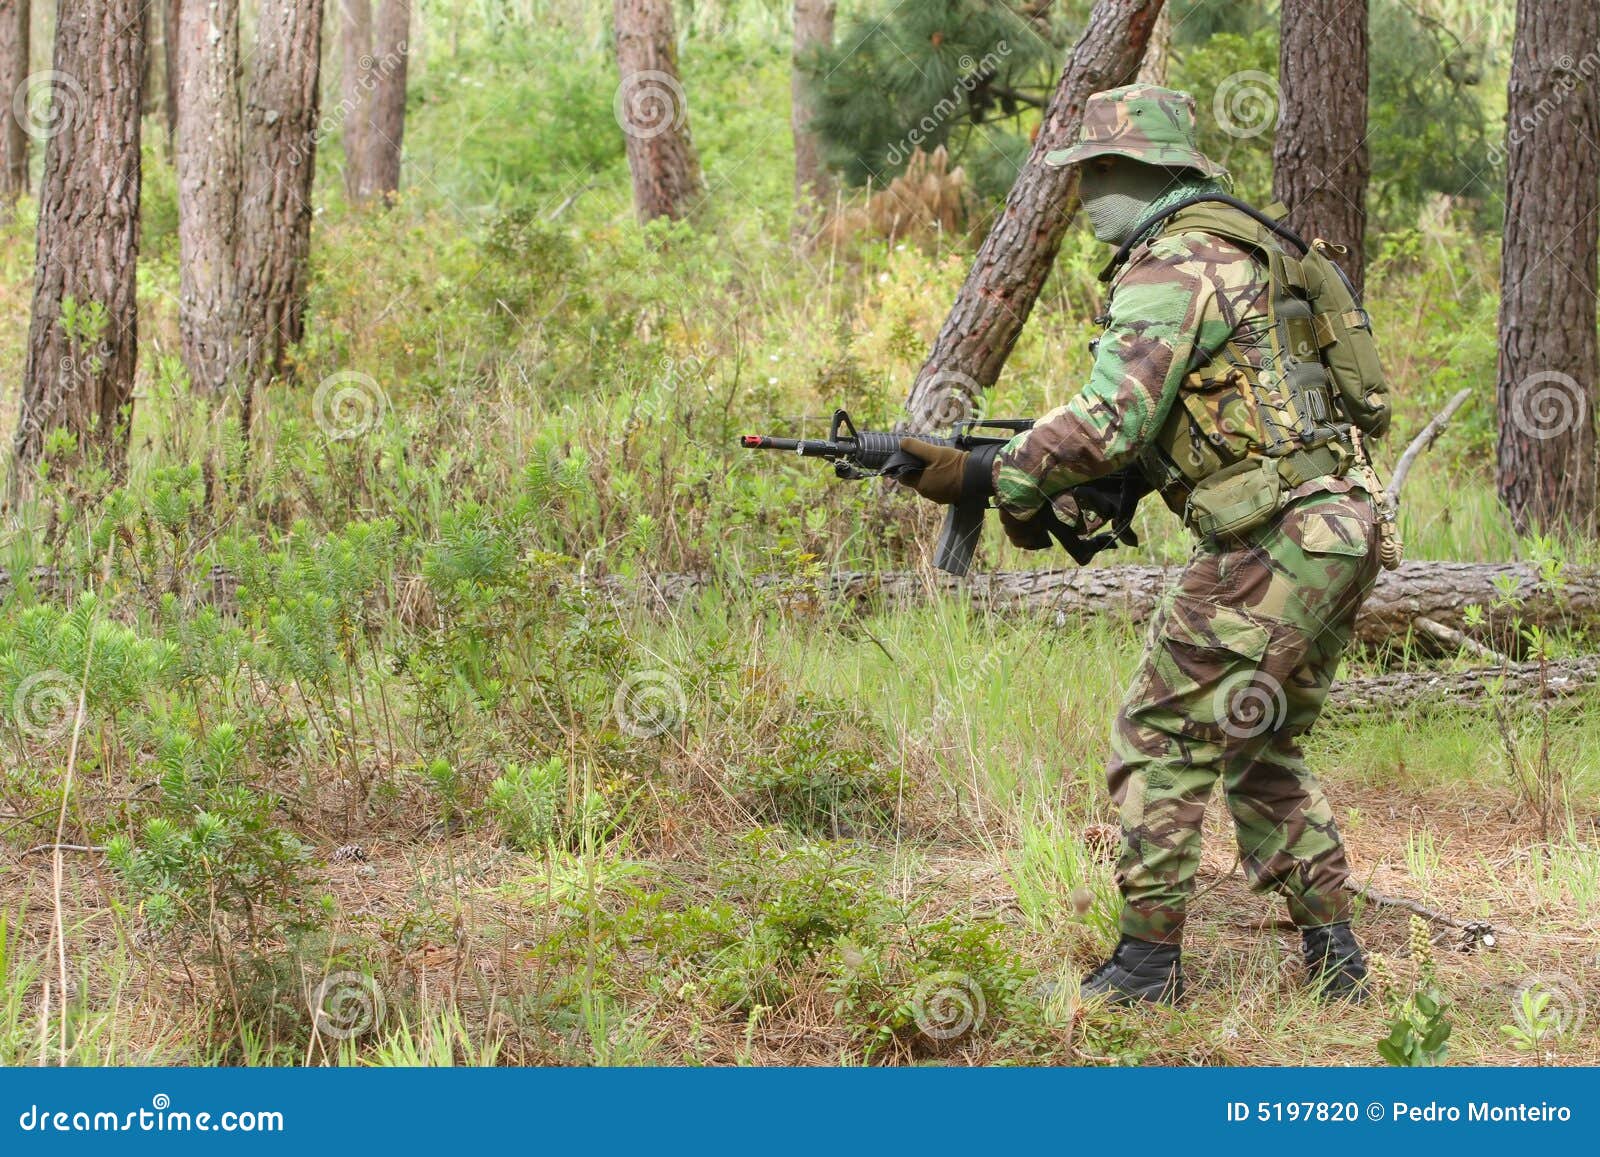 military training combat